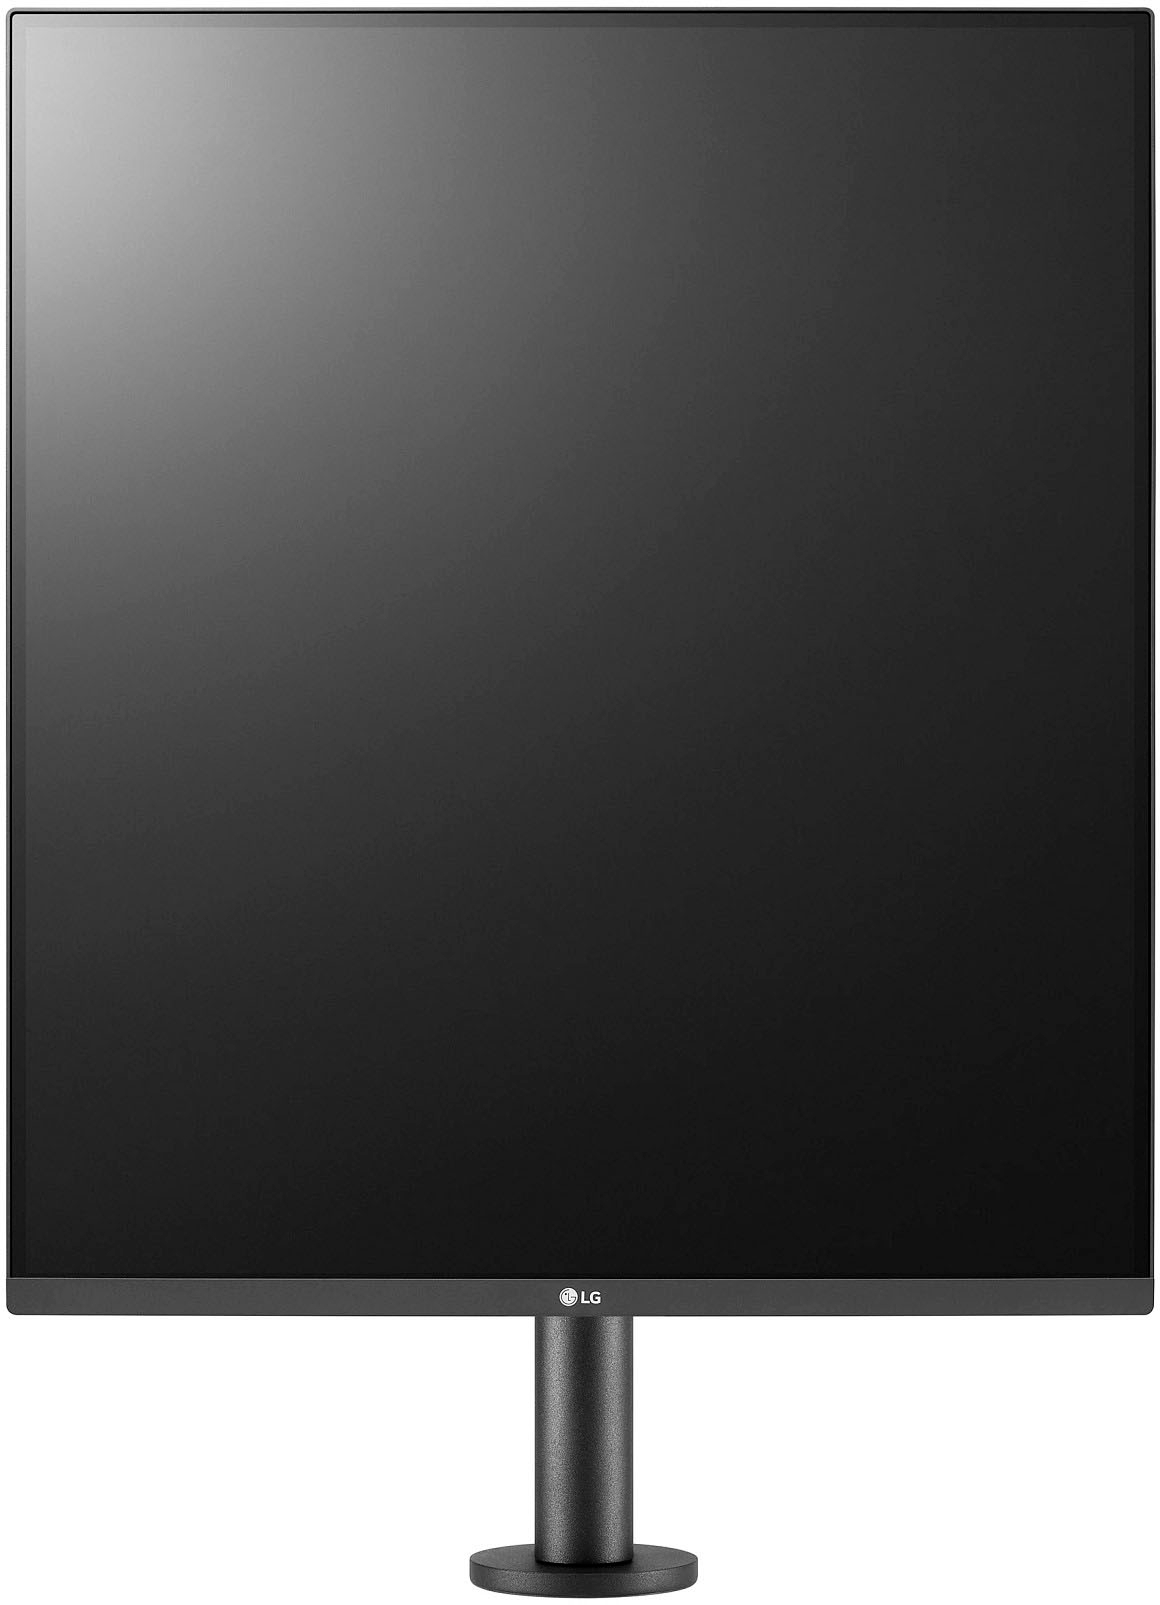 28 Smart Full HD IPS TV Monitor (28Diagonal) - 28MT49S